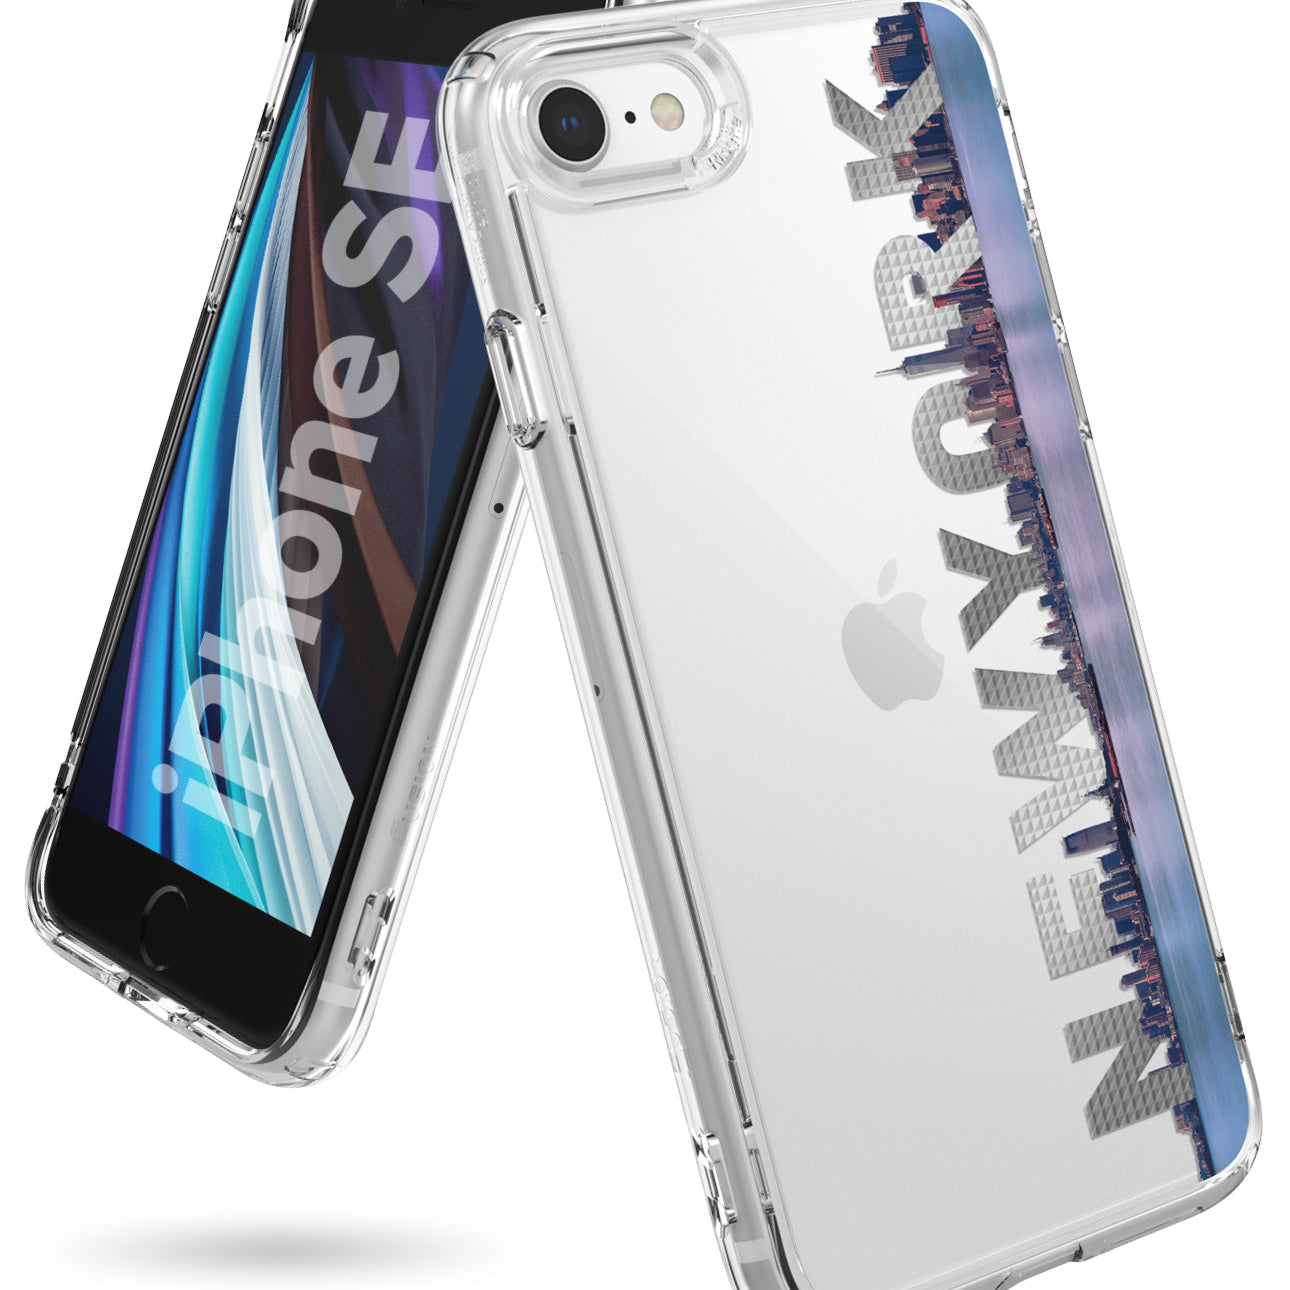 iPhone SE 2020 Case | Fusion Design 03. New York